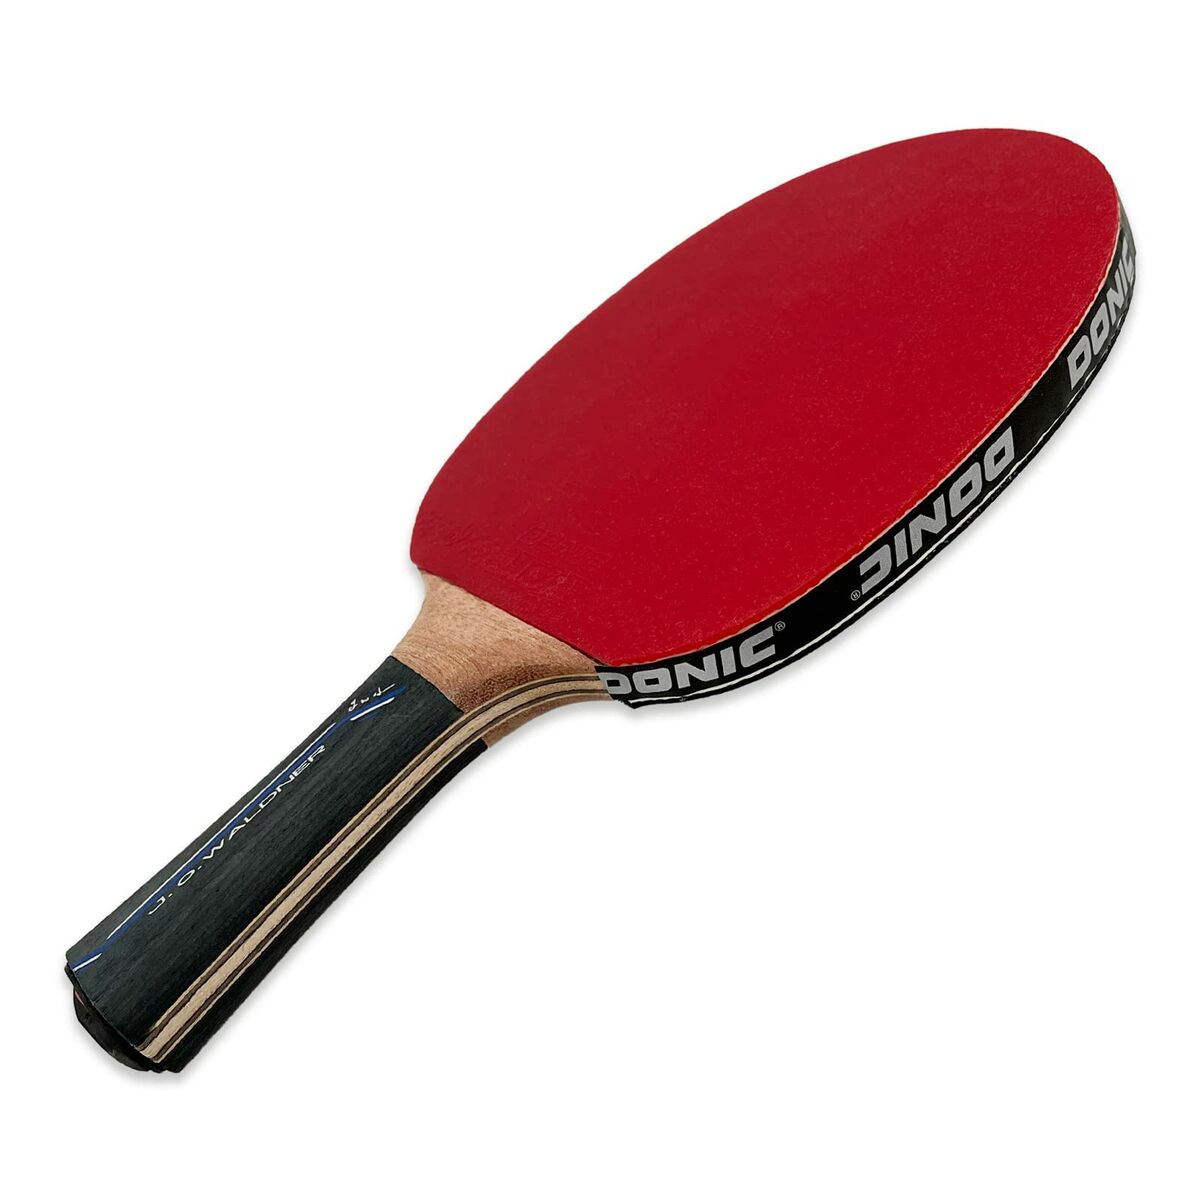 Ping Pong Racket Donic Waldner 3000